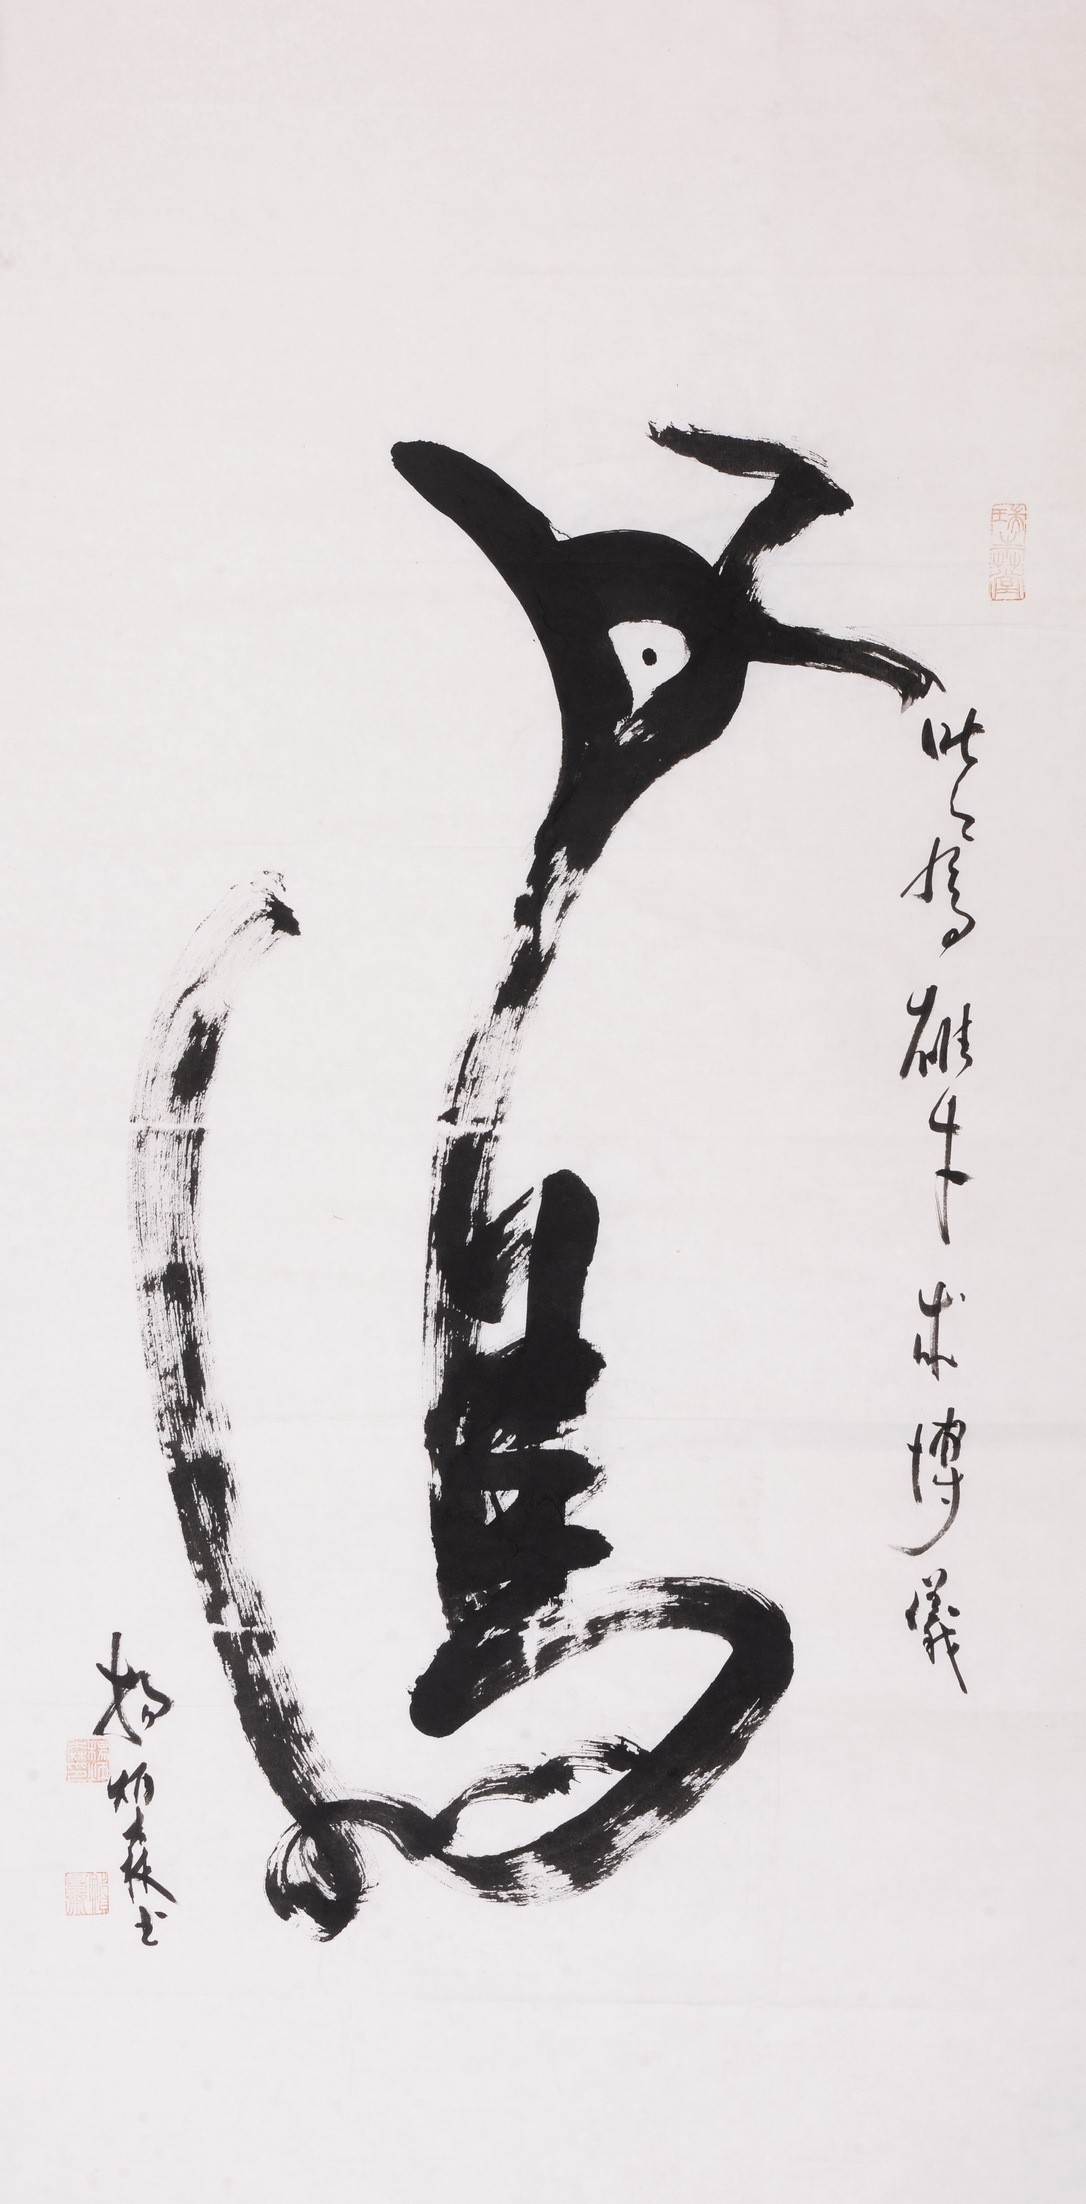 Other Calligraphy - CNAG001206